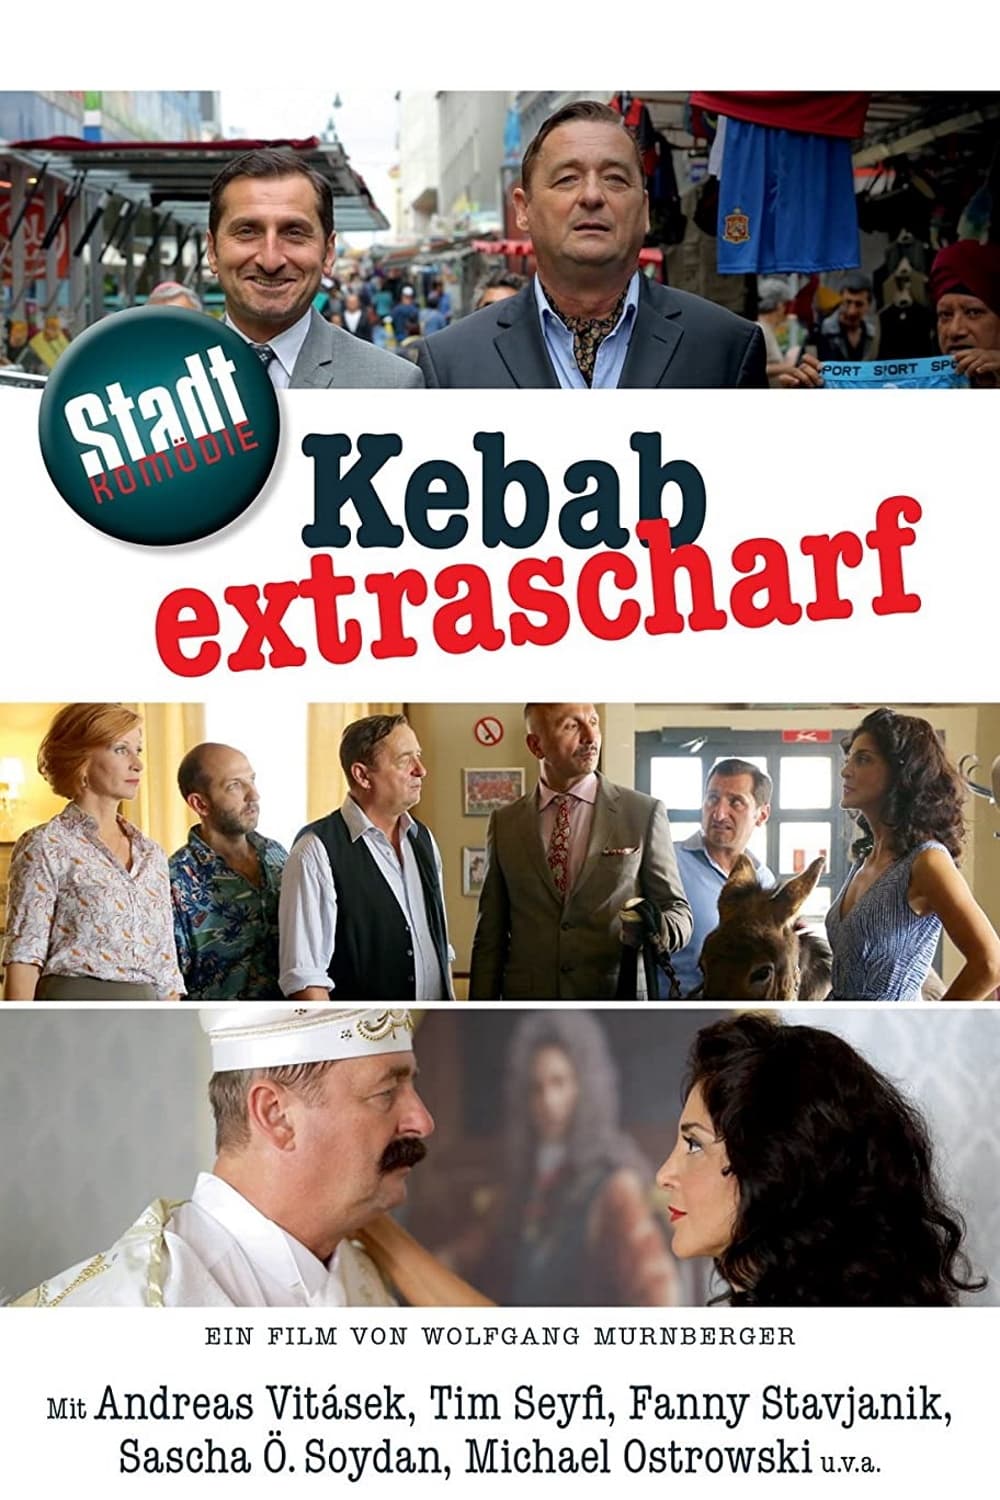 Kebab extra scharf! (2017)